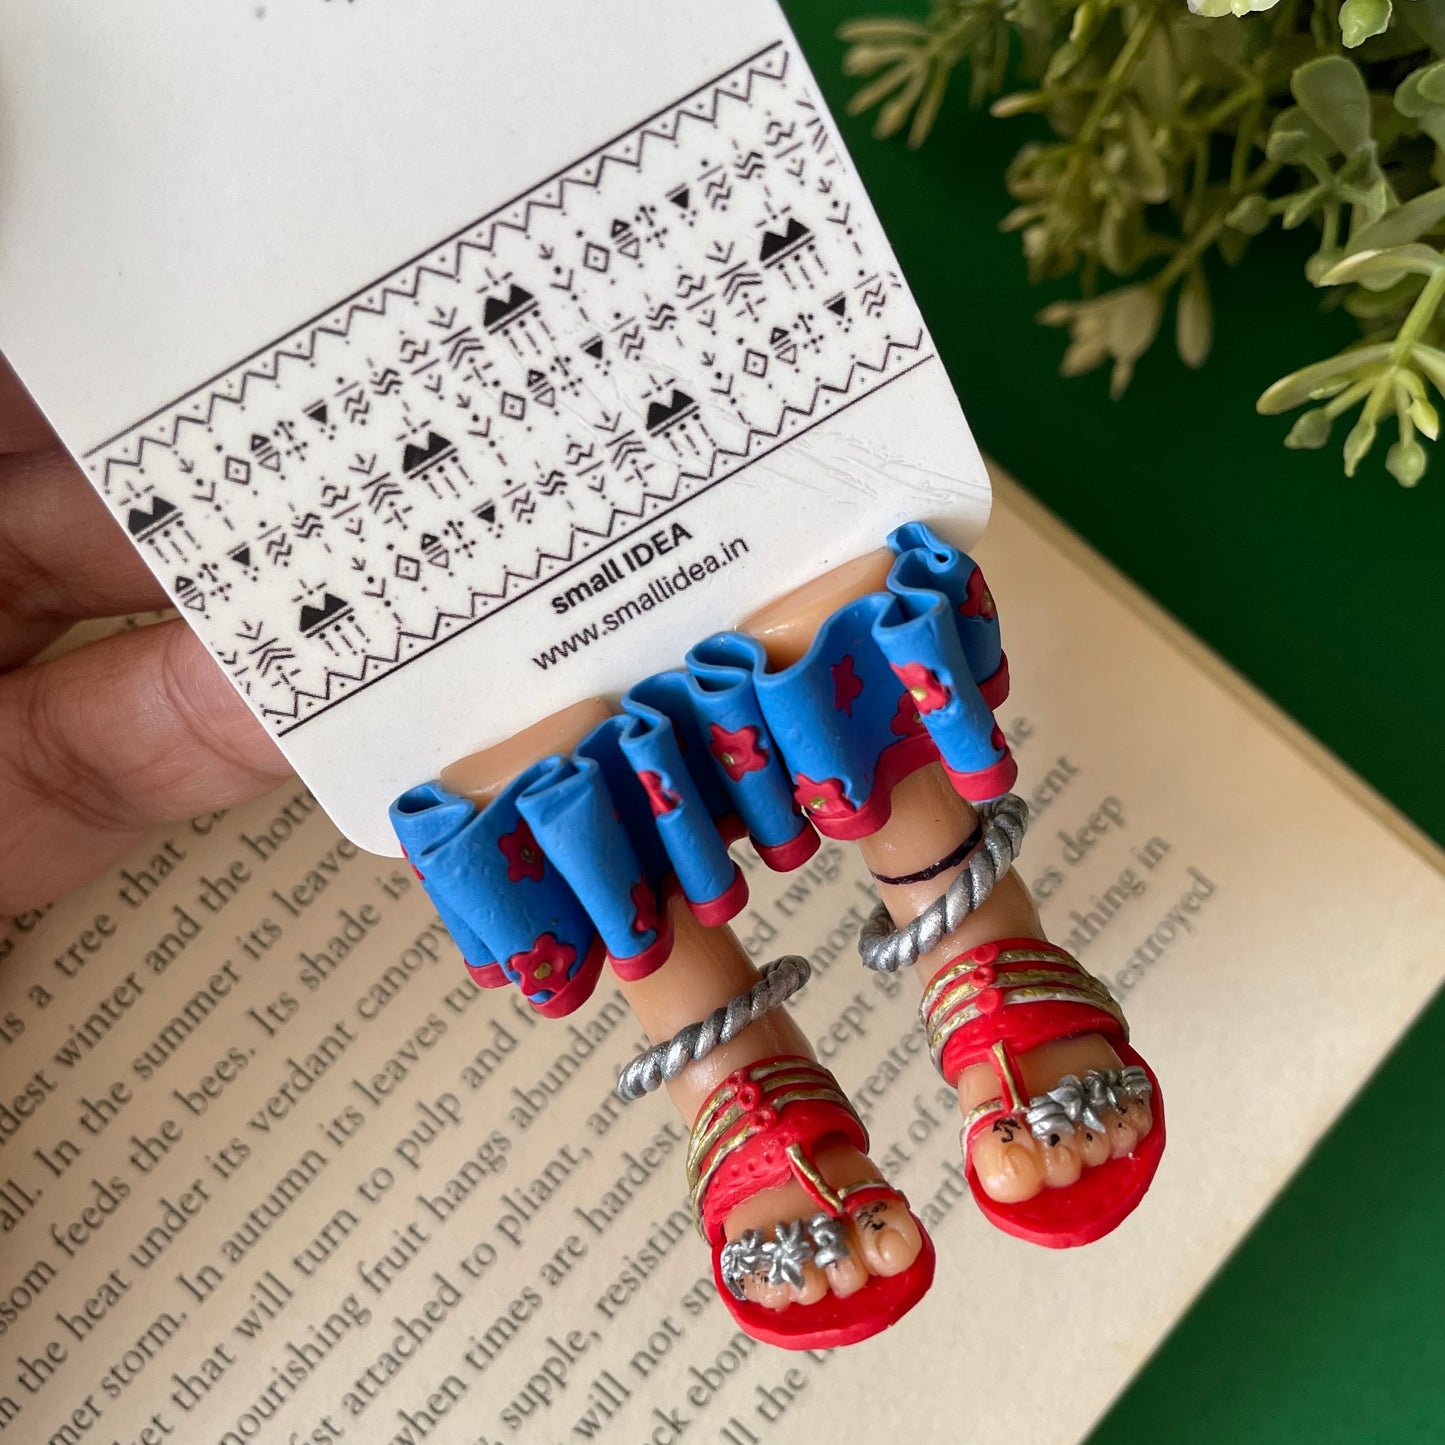 Aprajita Toor Tribal Feet Kolhapuri Chappals Miniature Leggy Bookmark